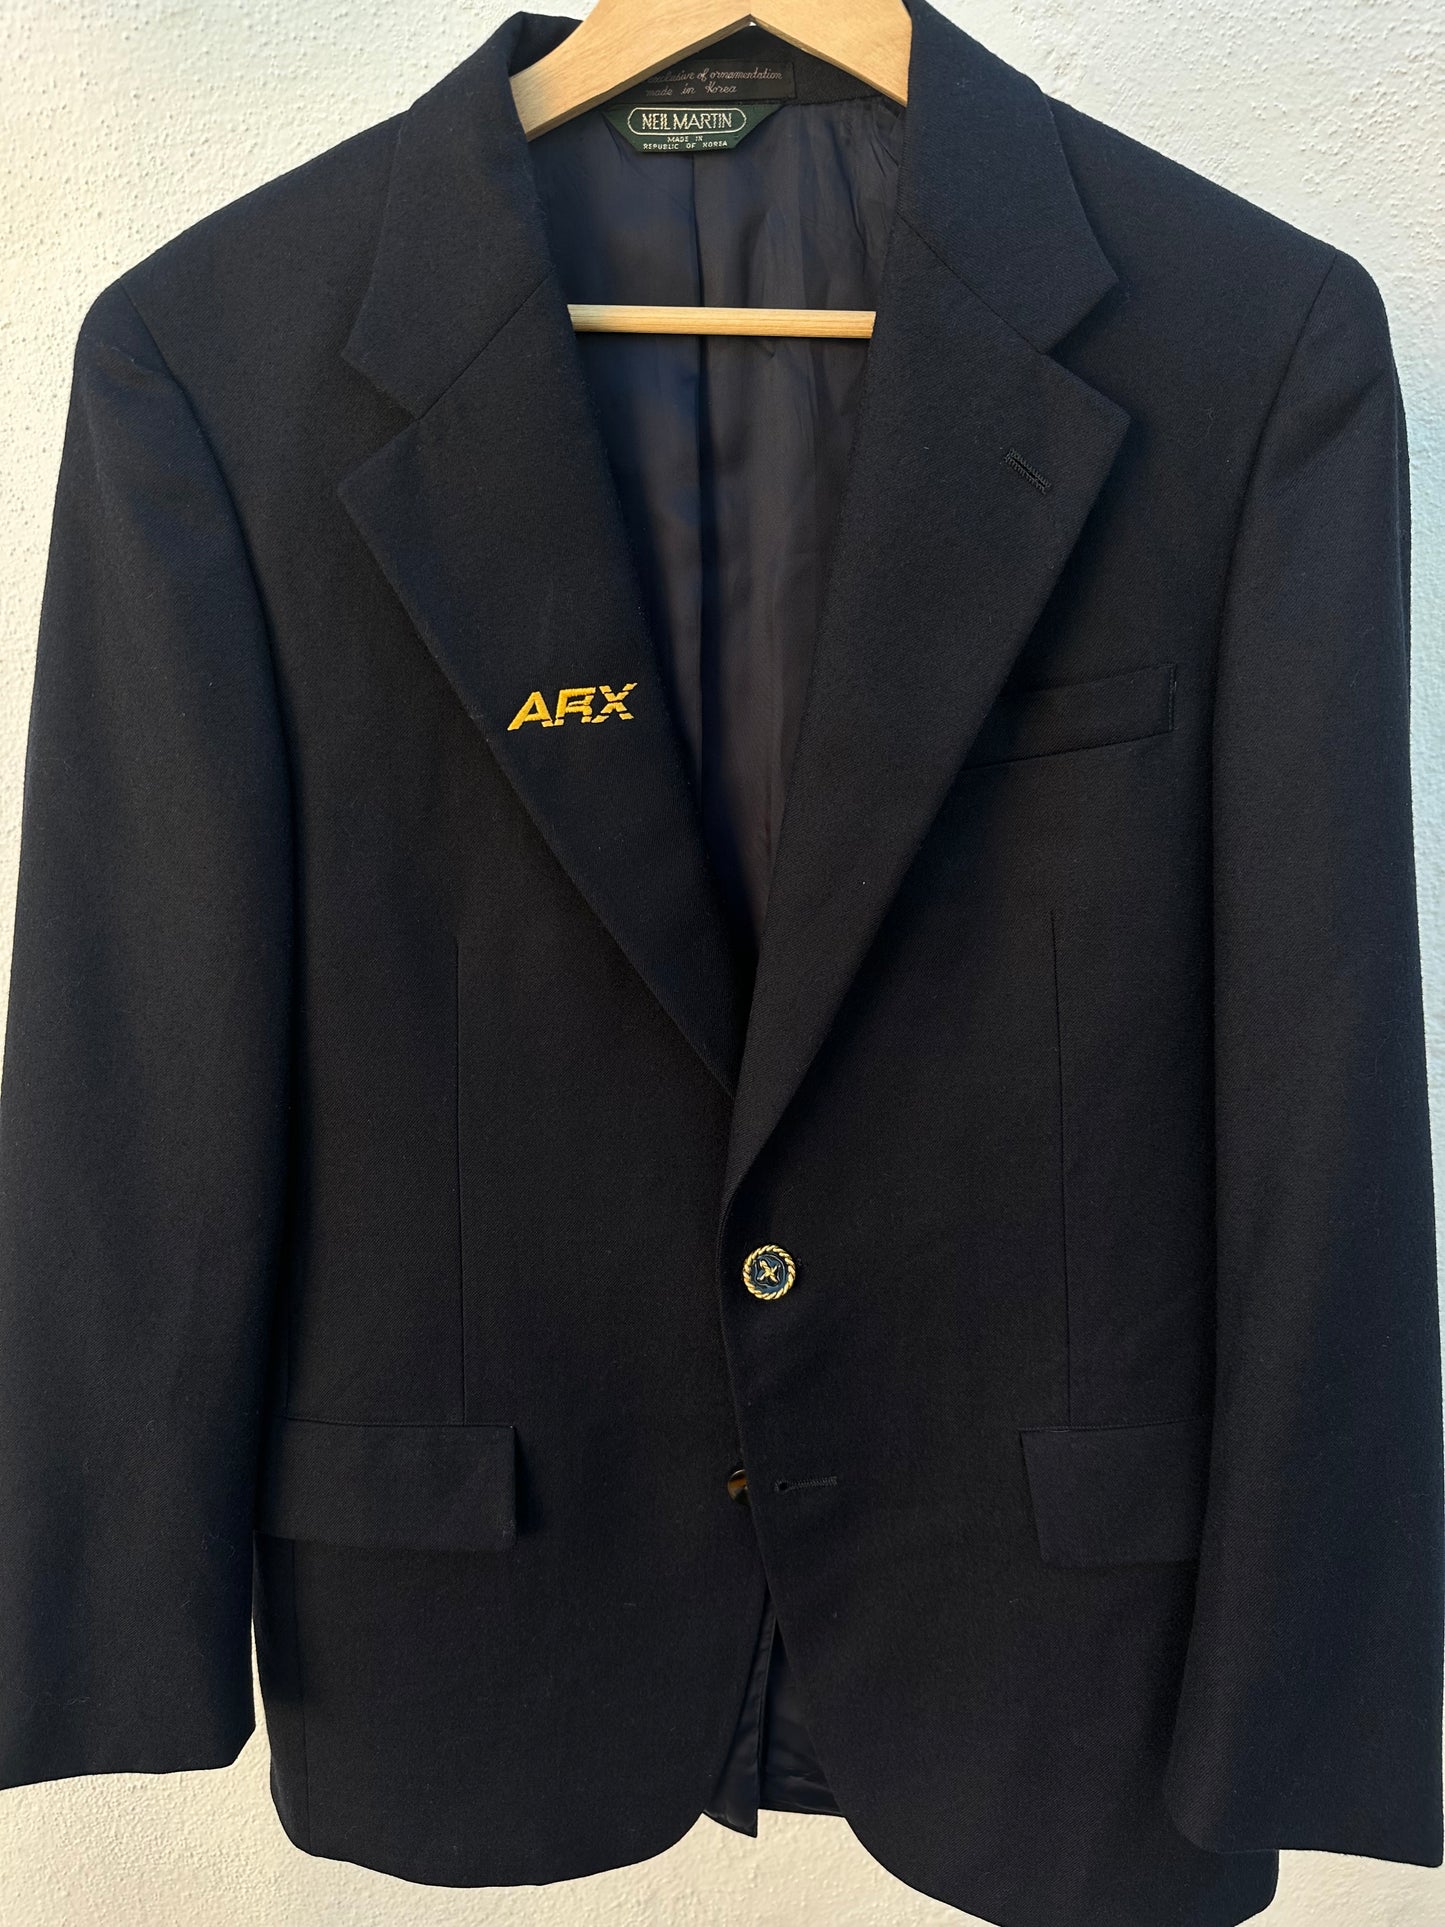 ARX - Blazer (Navy Blue)